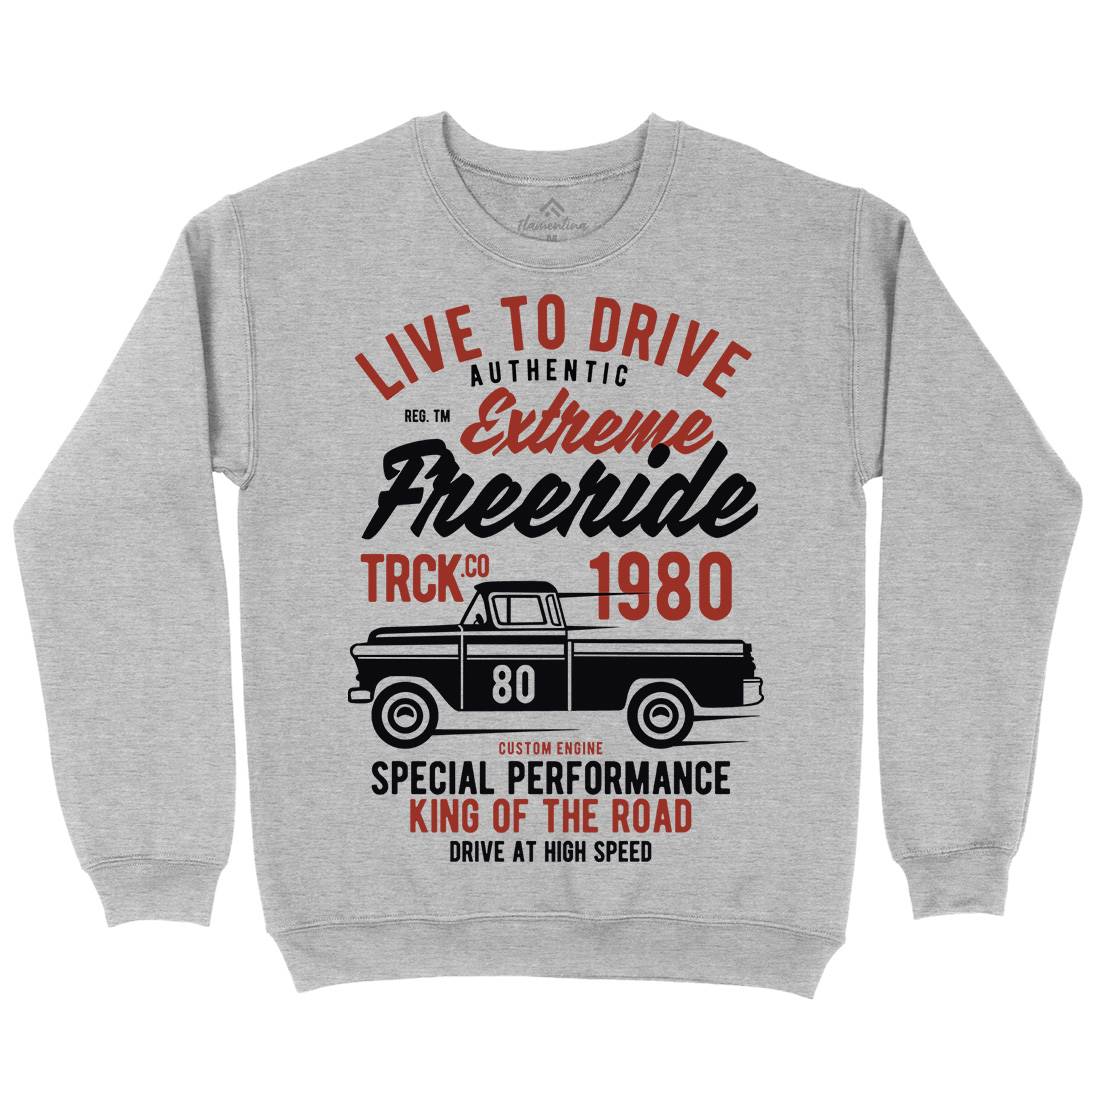 Extreme Freeride Truck Kids Crew Neck Sweatshirt Cars B401